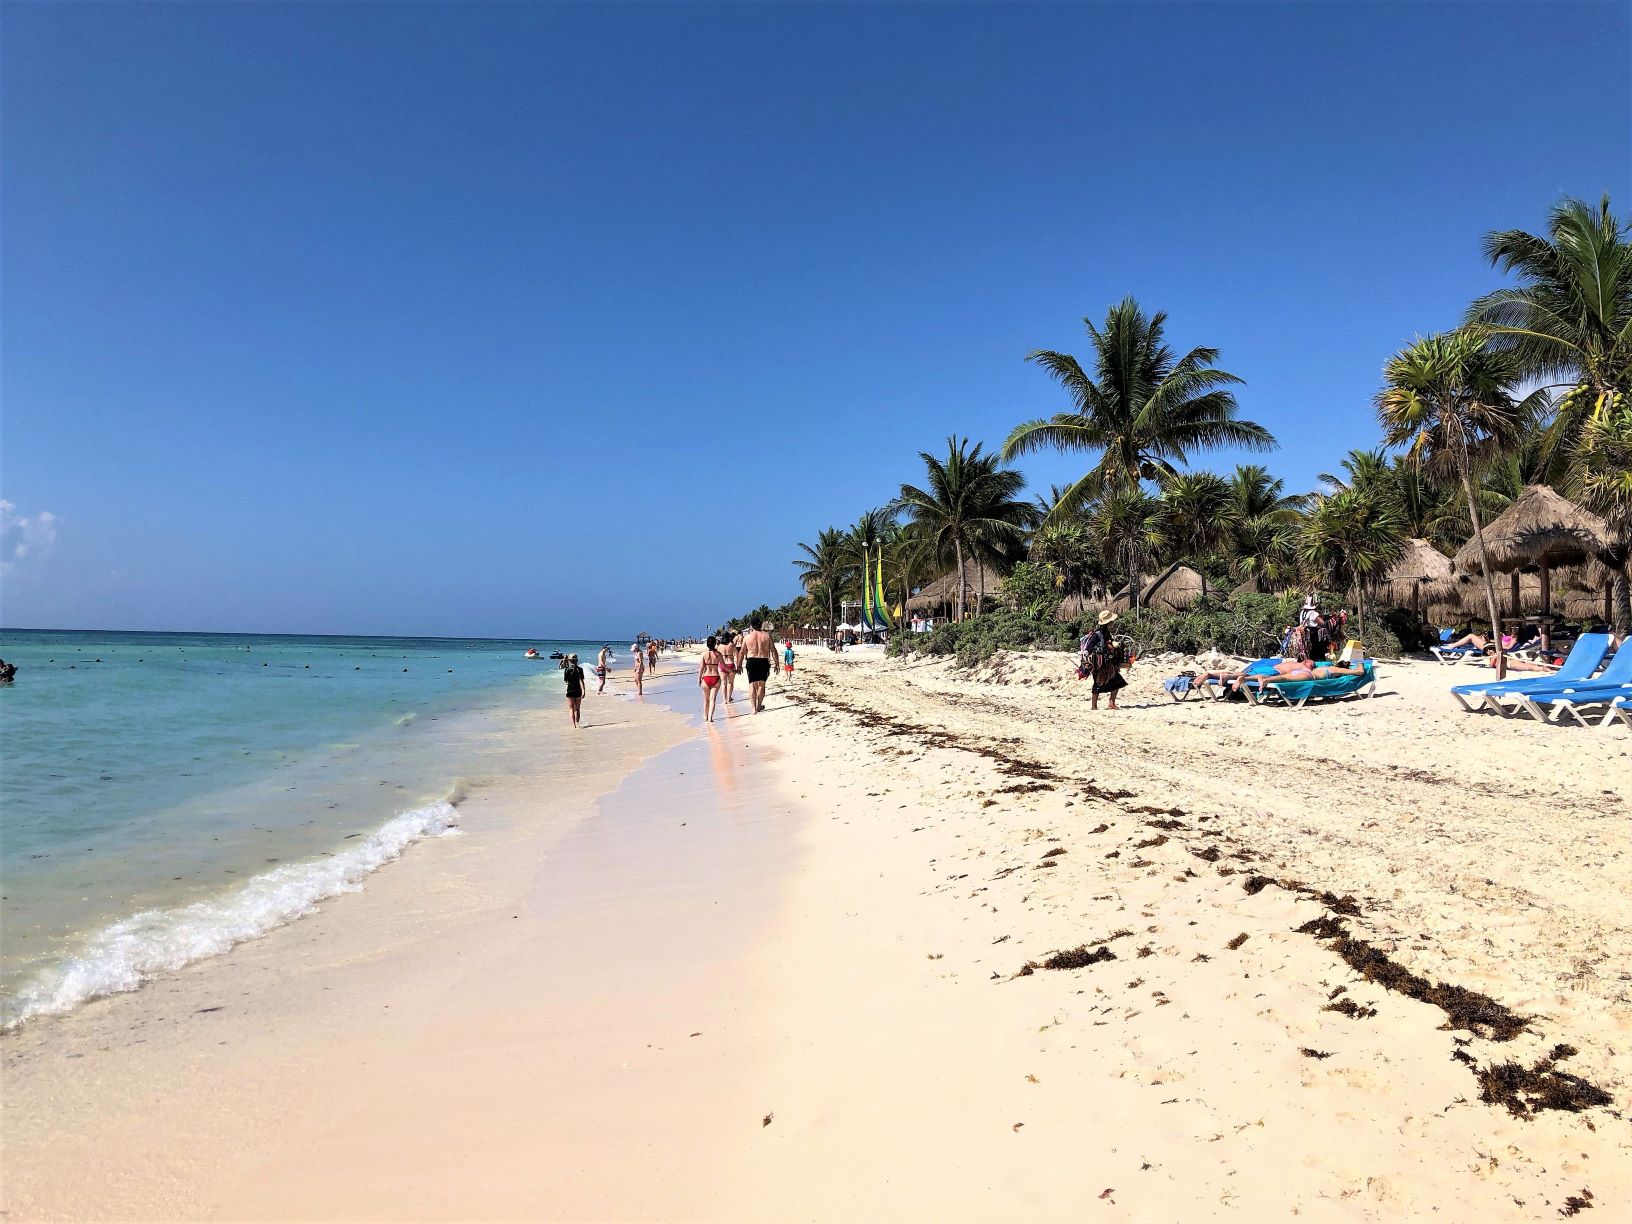 Playa del Carmen, Quintana Roo, Mexico